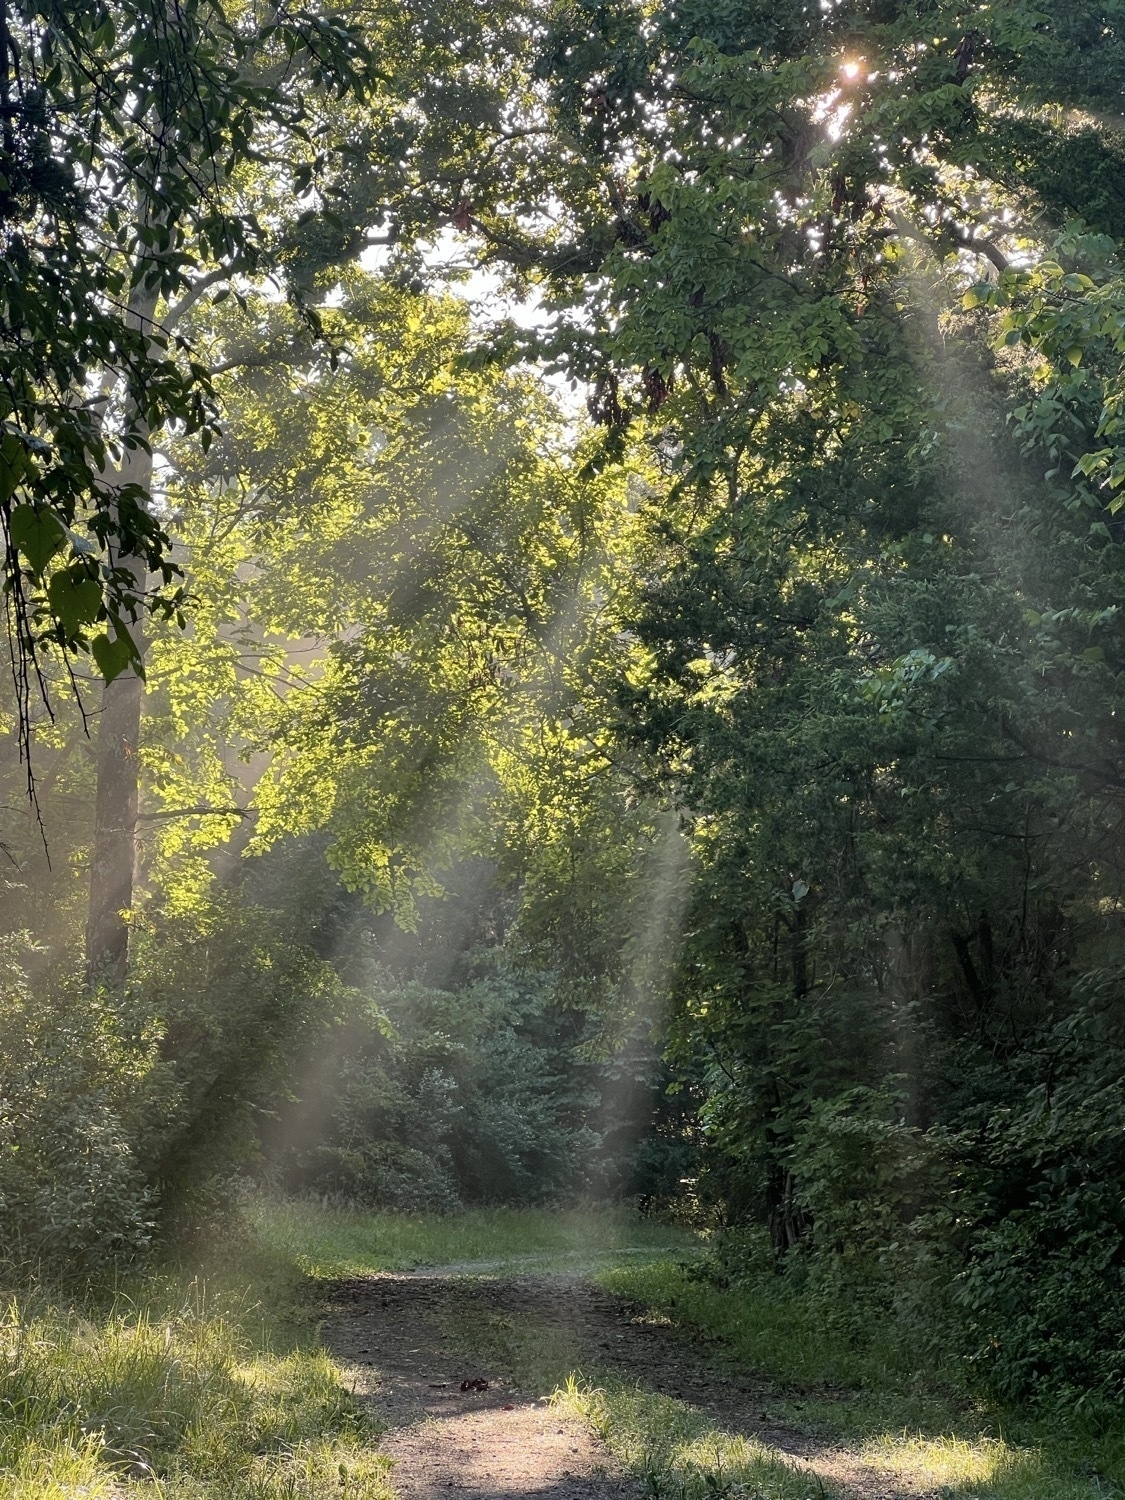 Morning sun rays shining through trees along a gravel road.